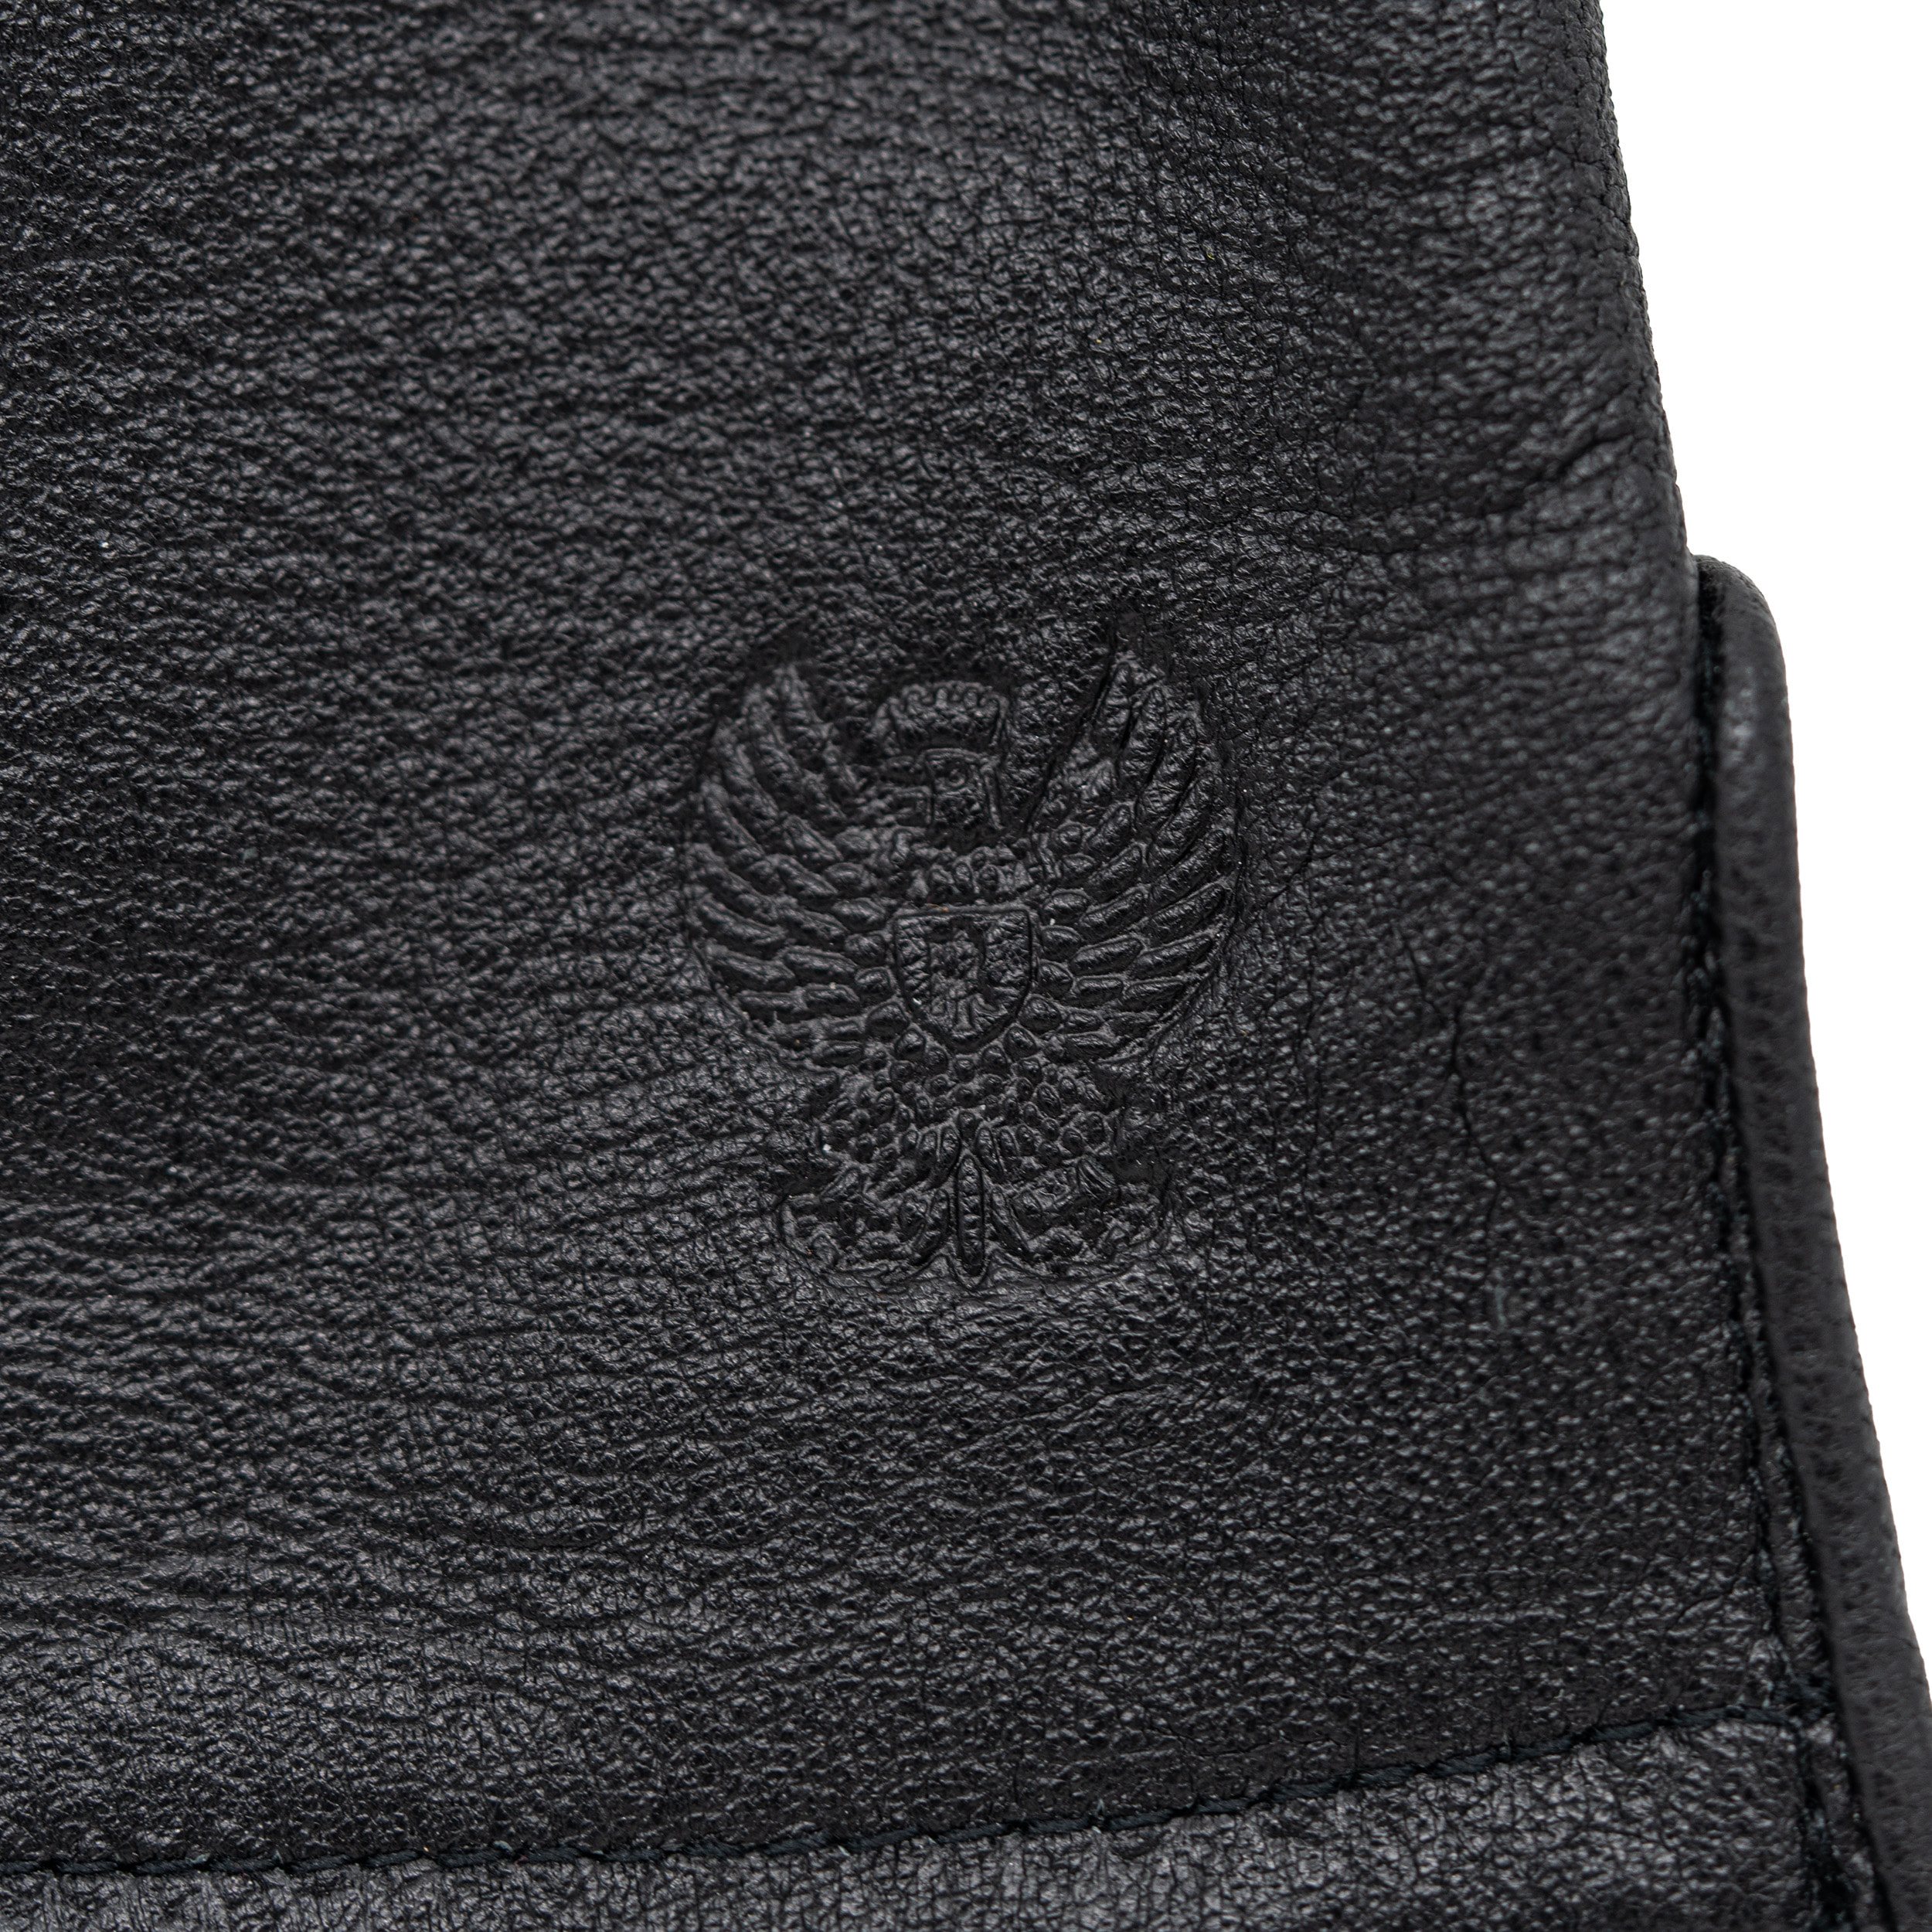 Italian leather gloves BLACK Italien Army 2765796 L-11